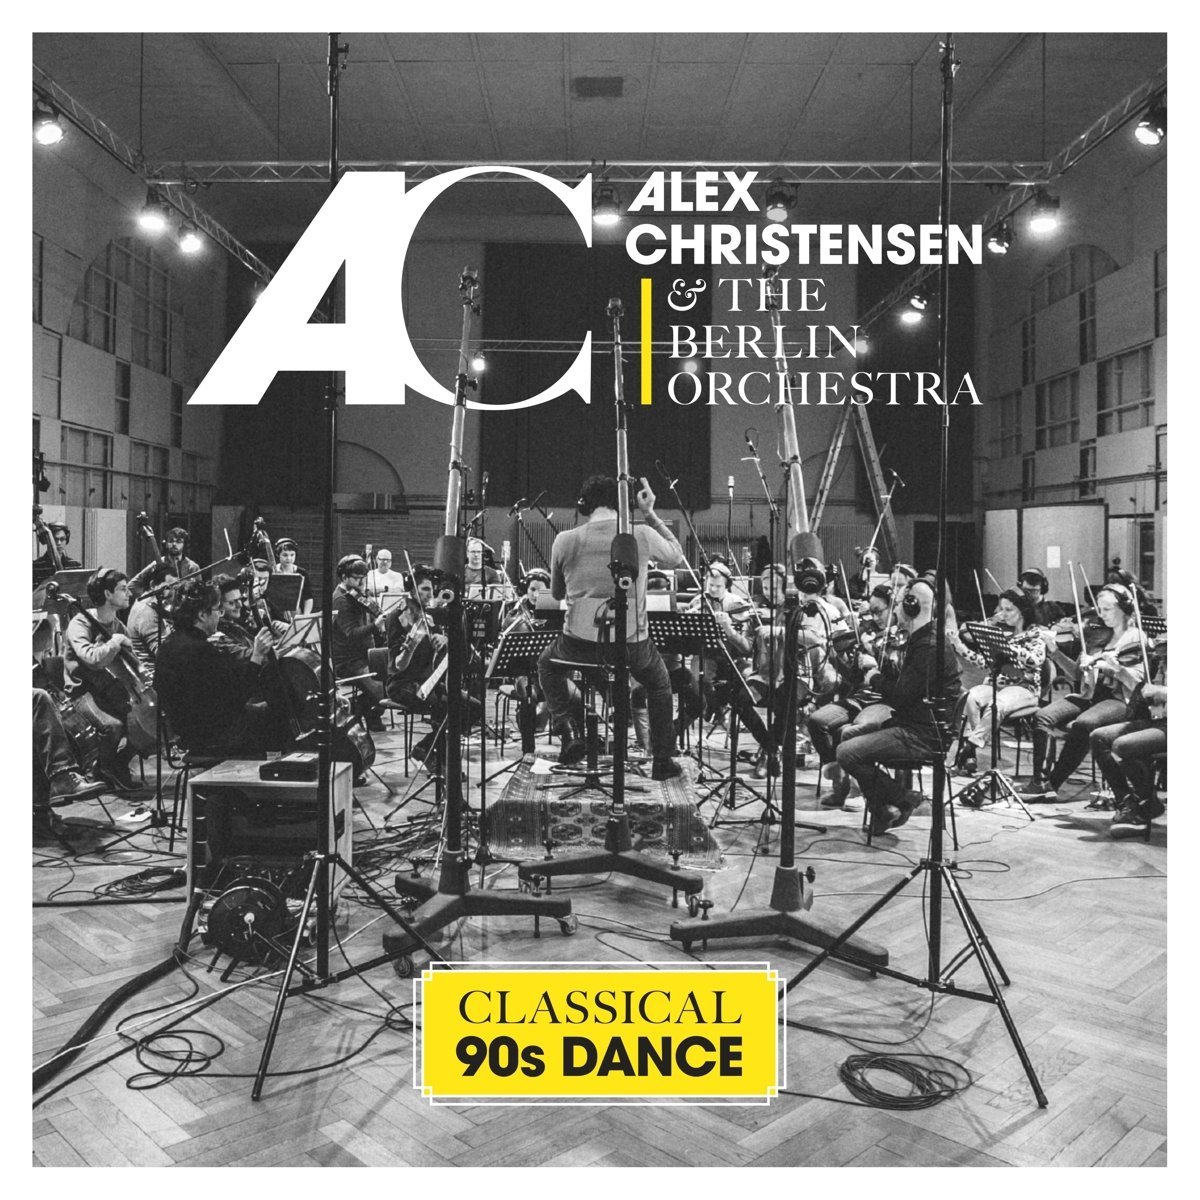 Dobra muzyka do samochodu. W trasie. Alex Christensen & The Berlin Orchestra – Classical 90s Dance